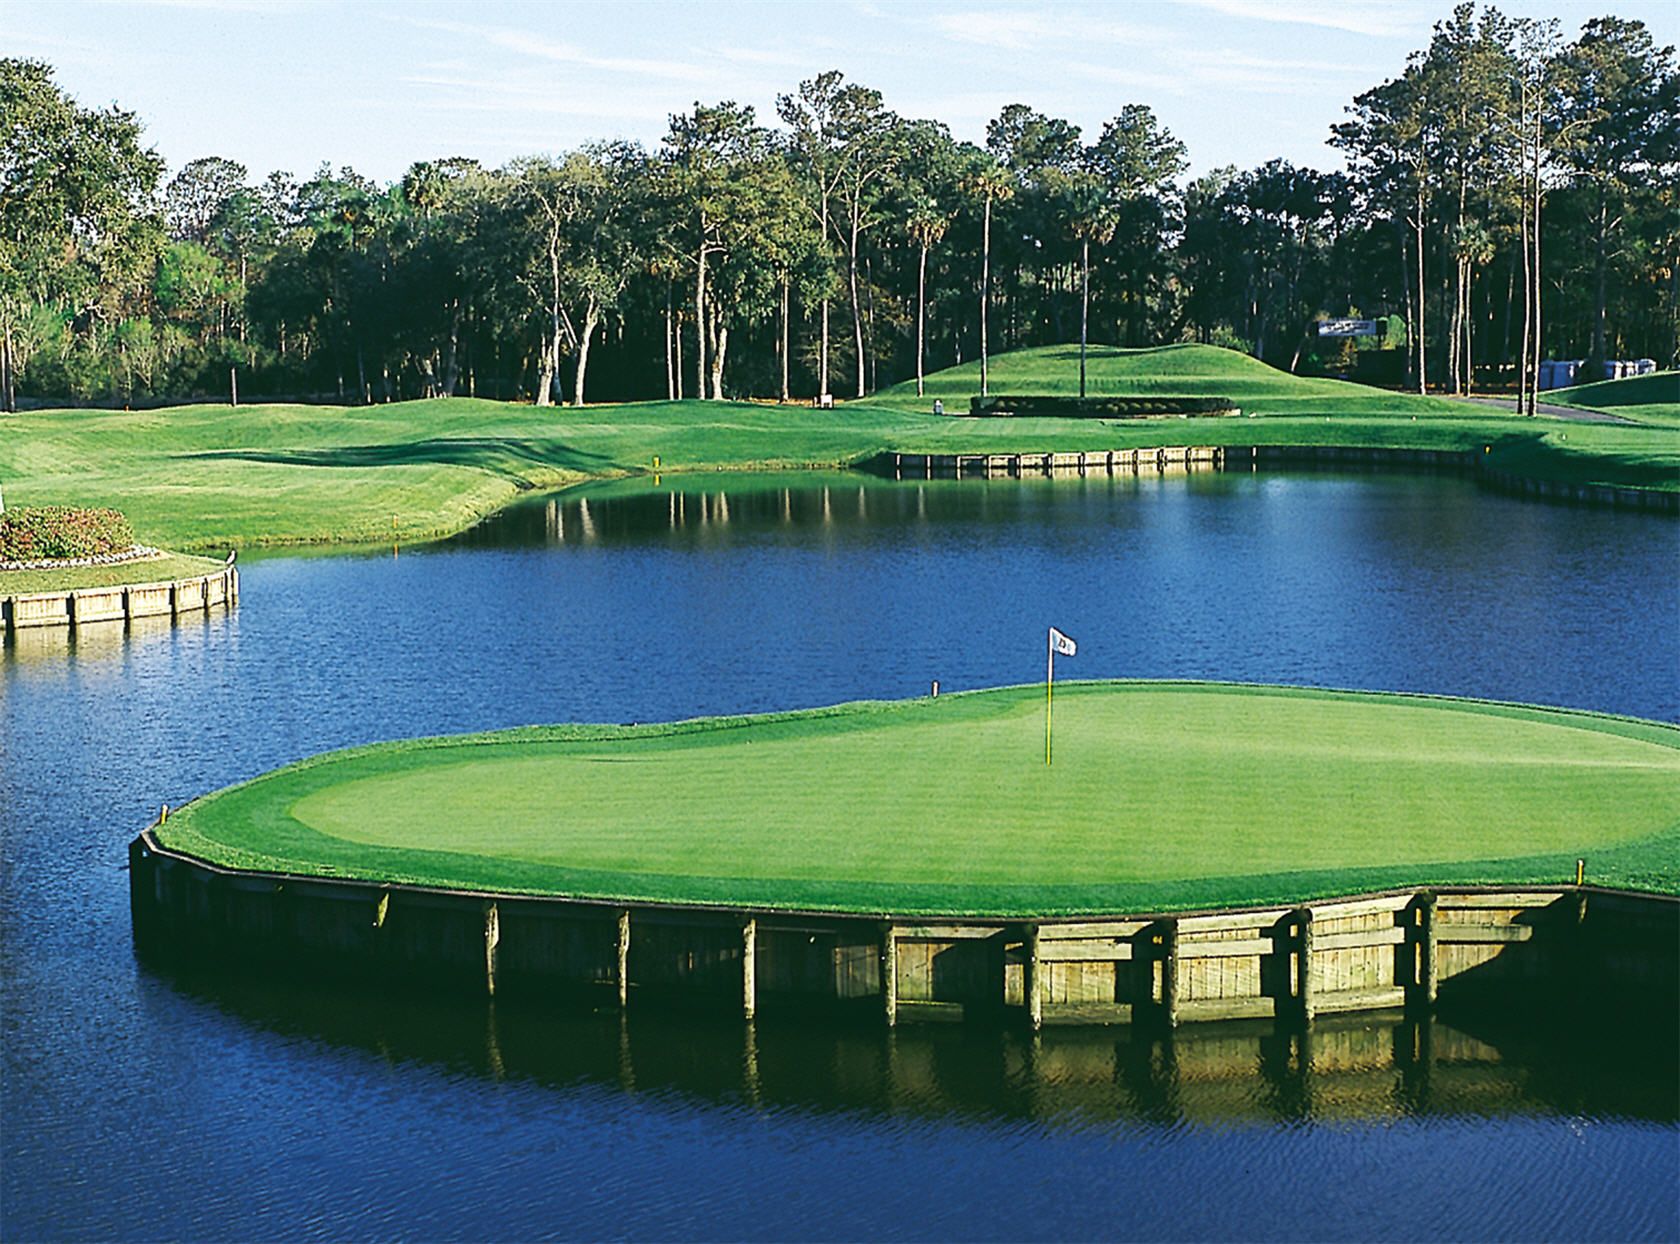 Golf Desktop Wallpaper, Golf Courses Images, New Backgrounds